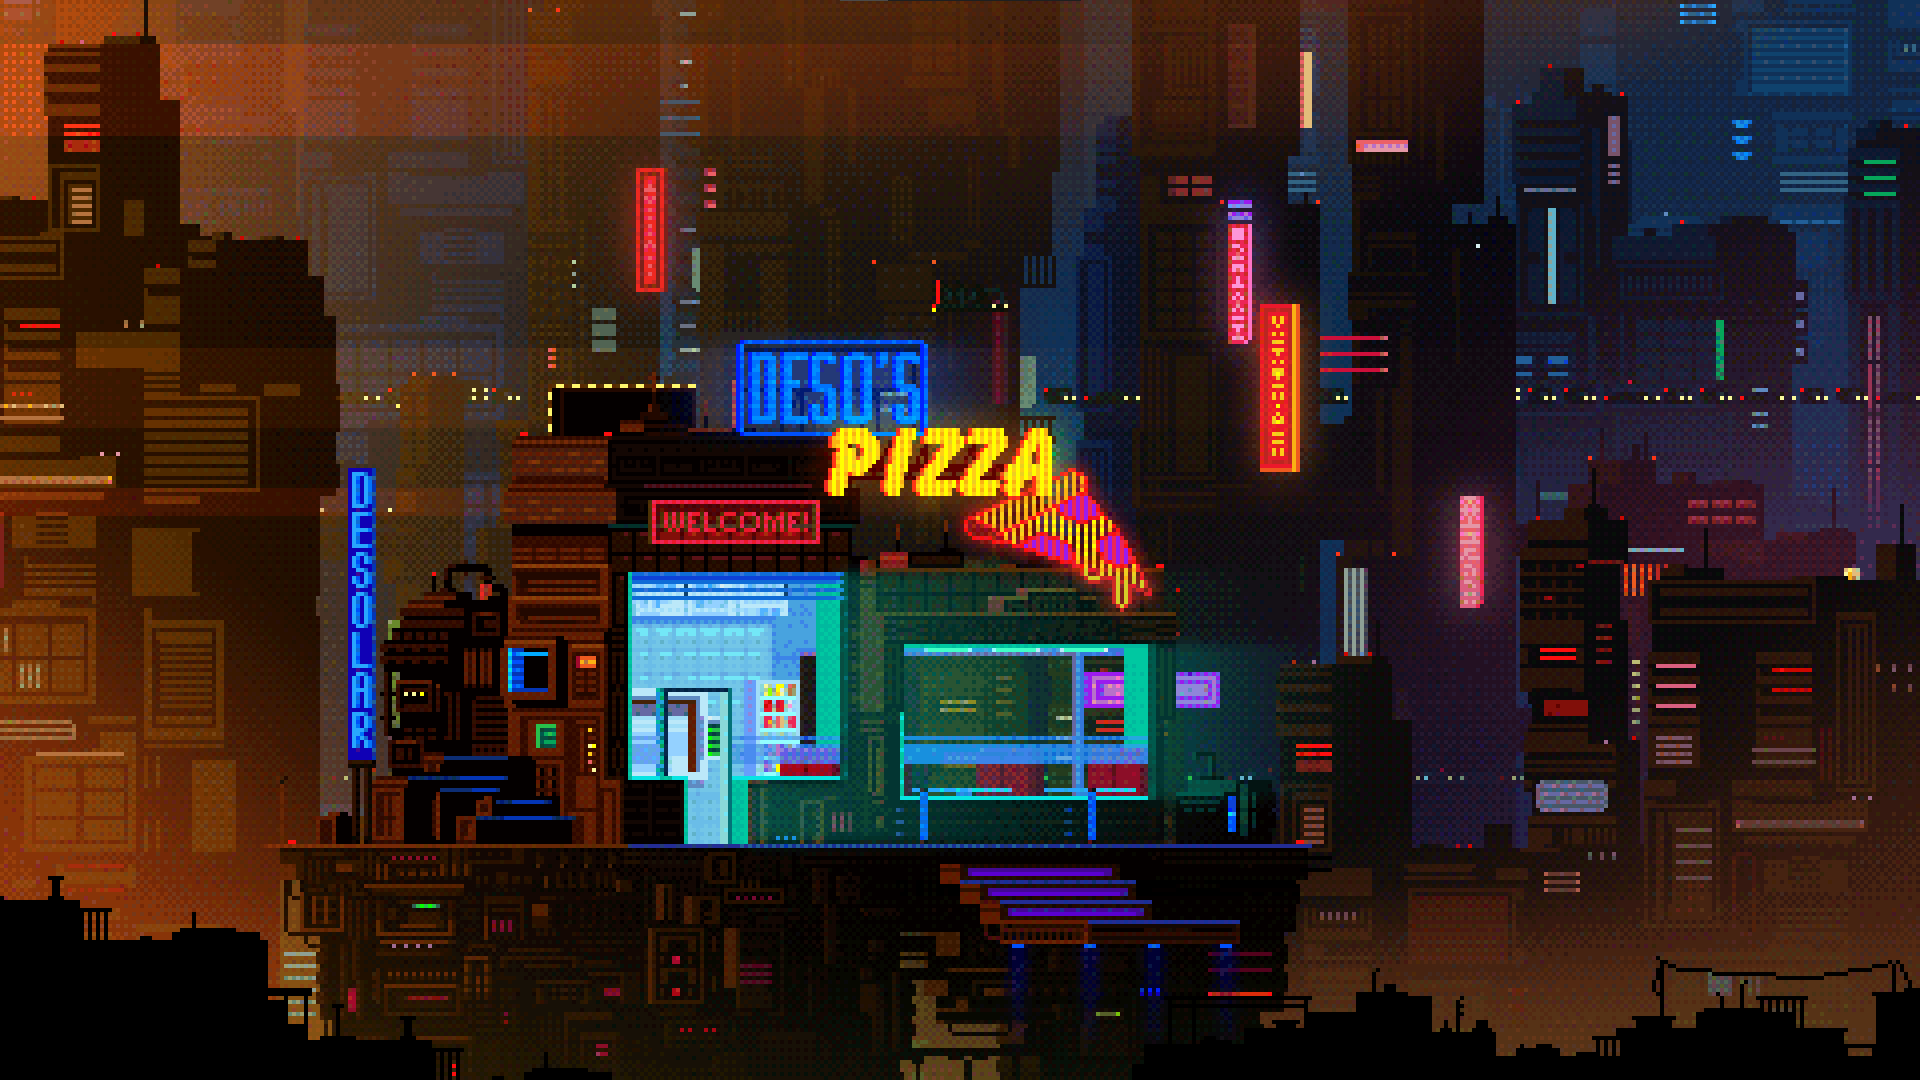 Pixel Art Pizza Science Fiction Digital Art Neon Sign Cyberpunk 1920x1080